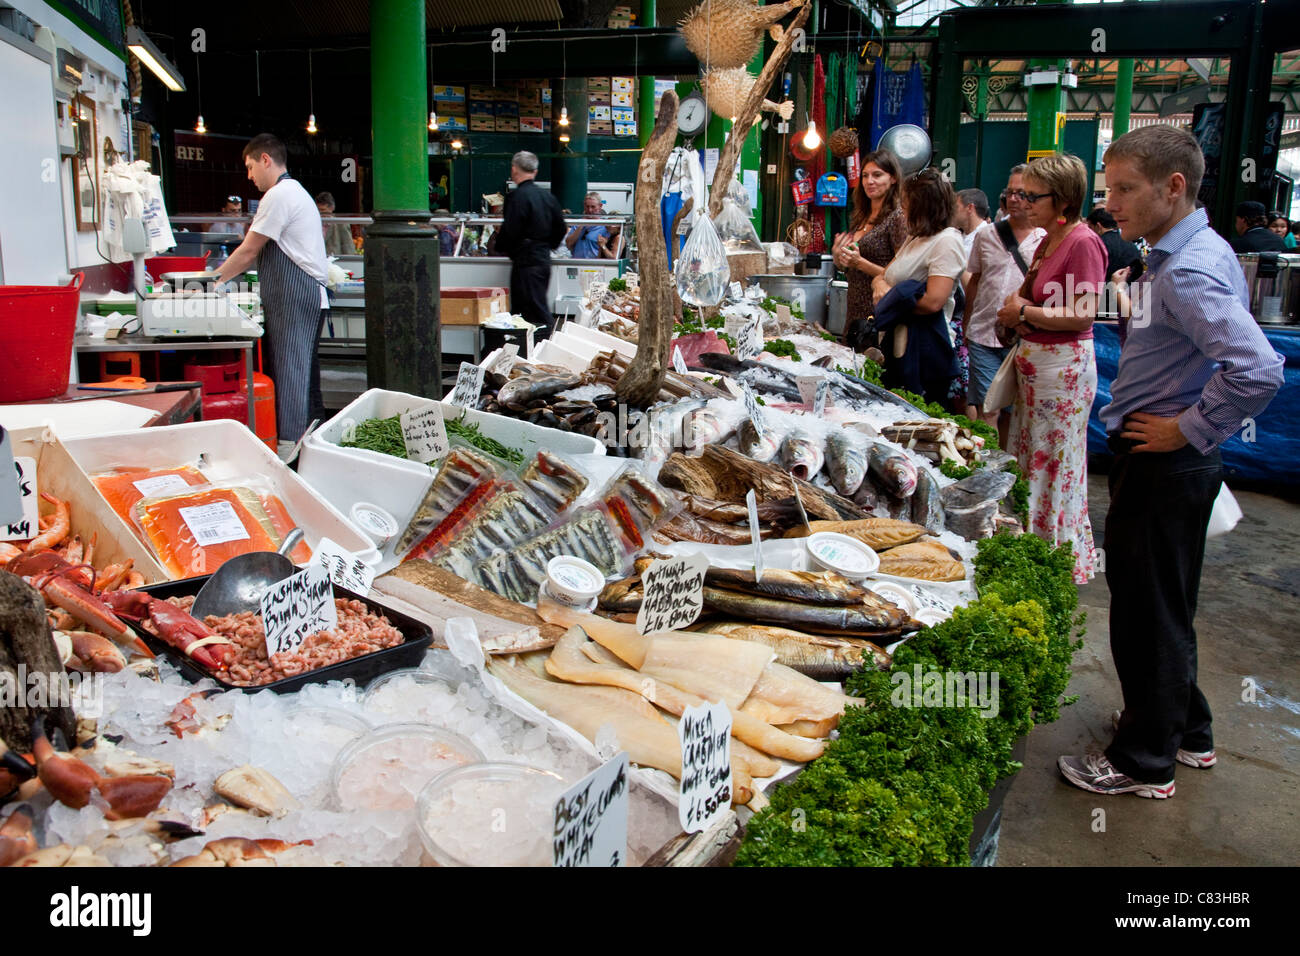 Fresh Fish Stall, Borough Market, London, England Stock Photo - Alamy